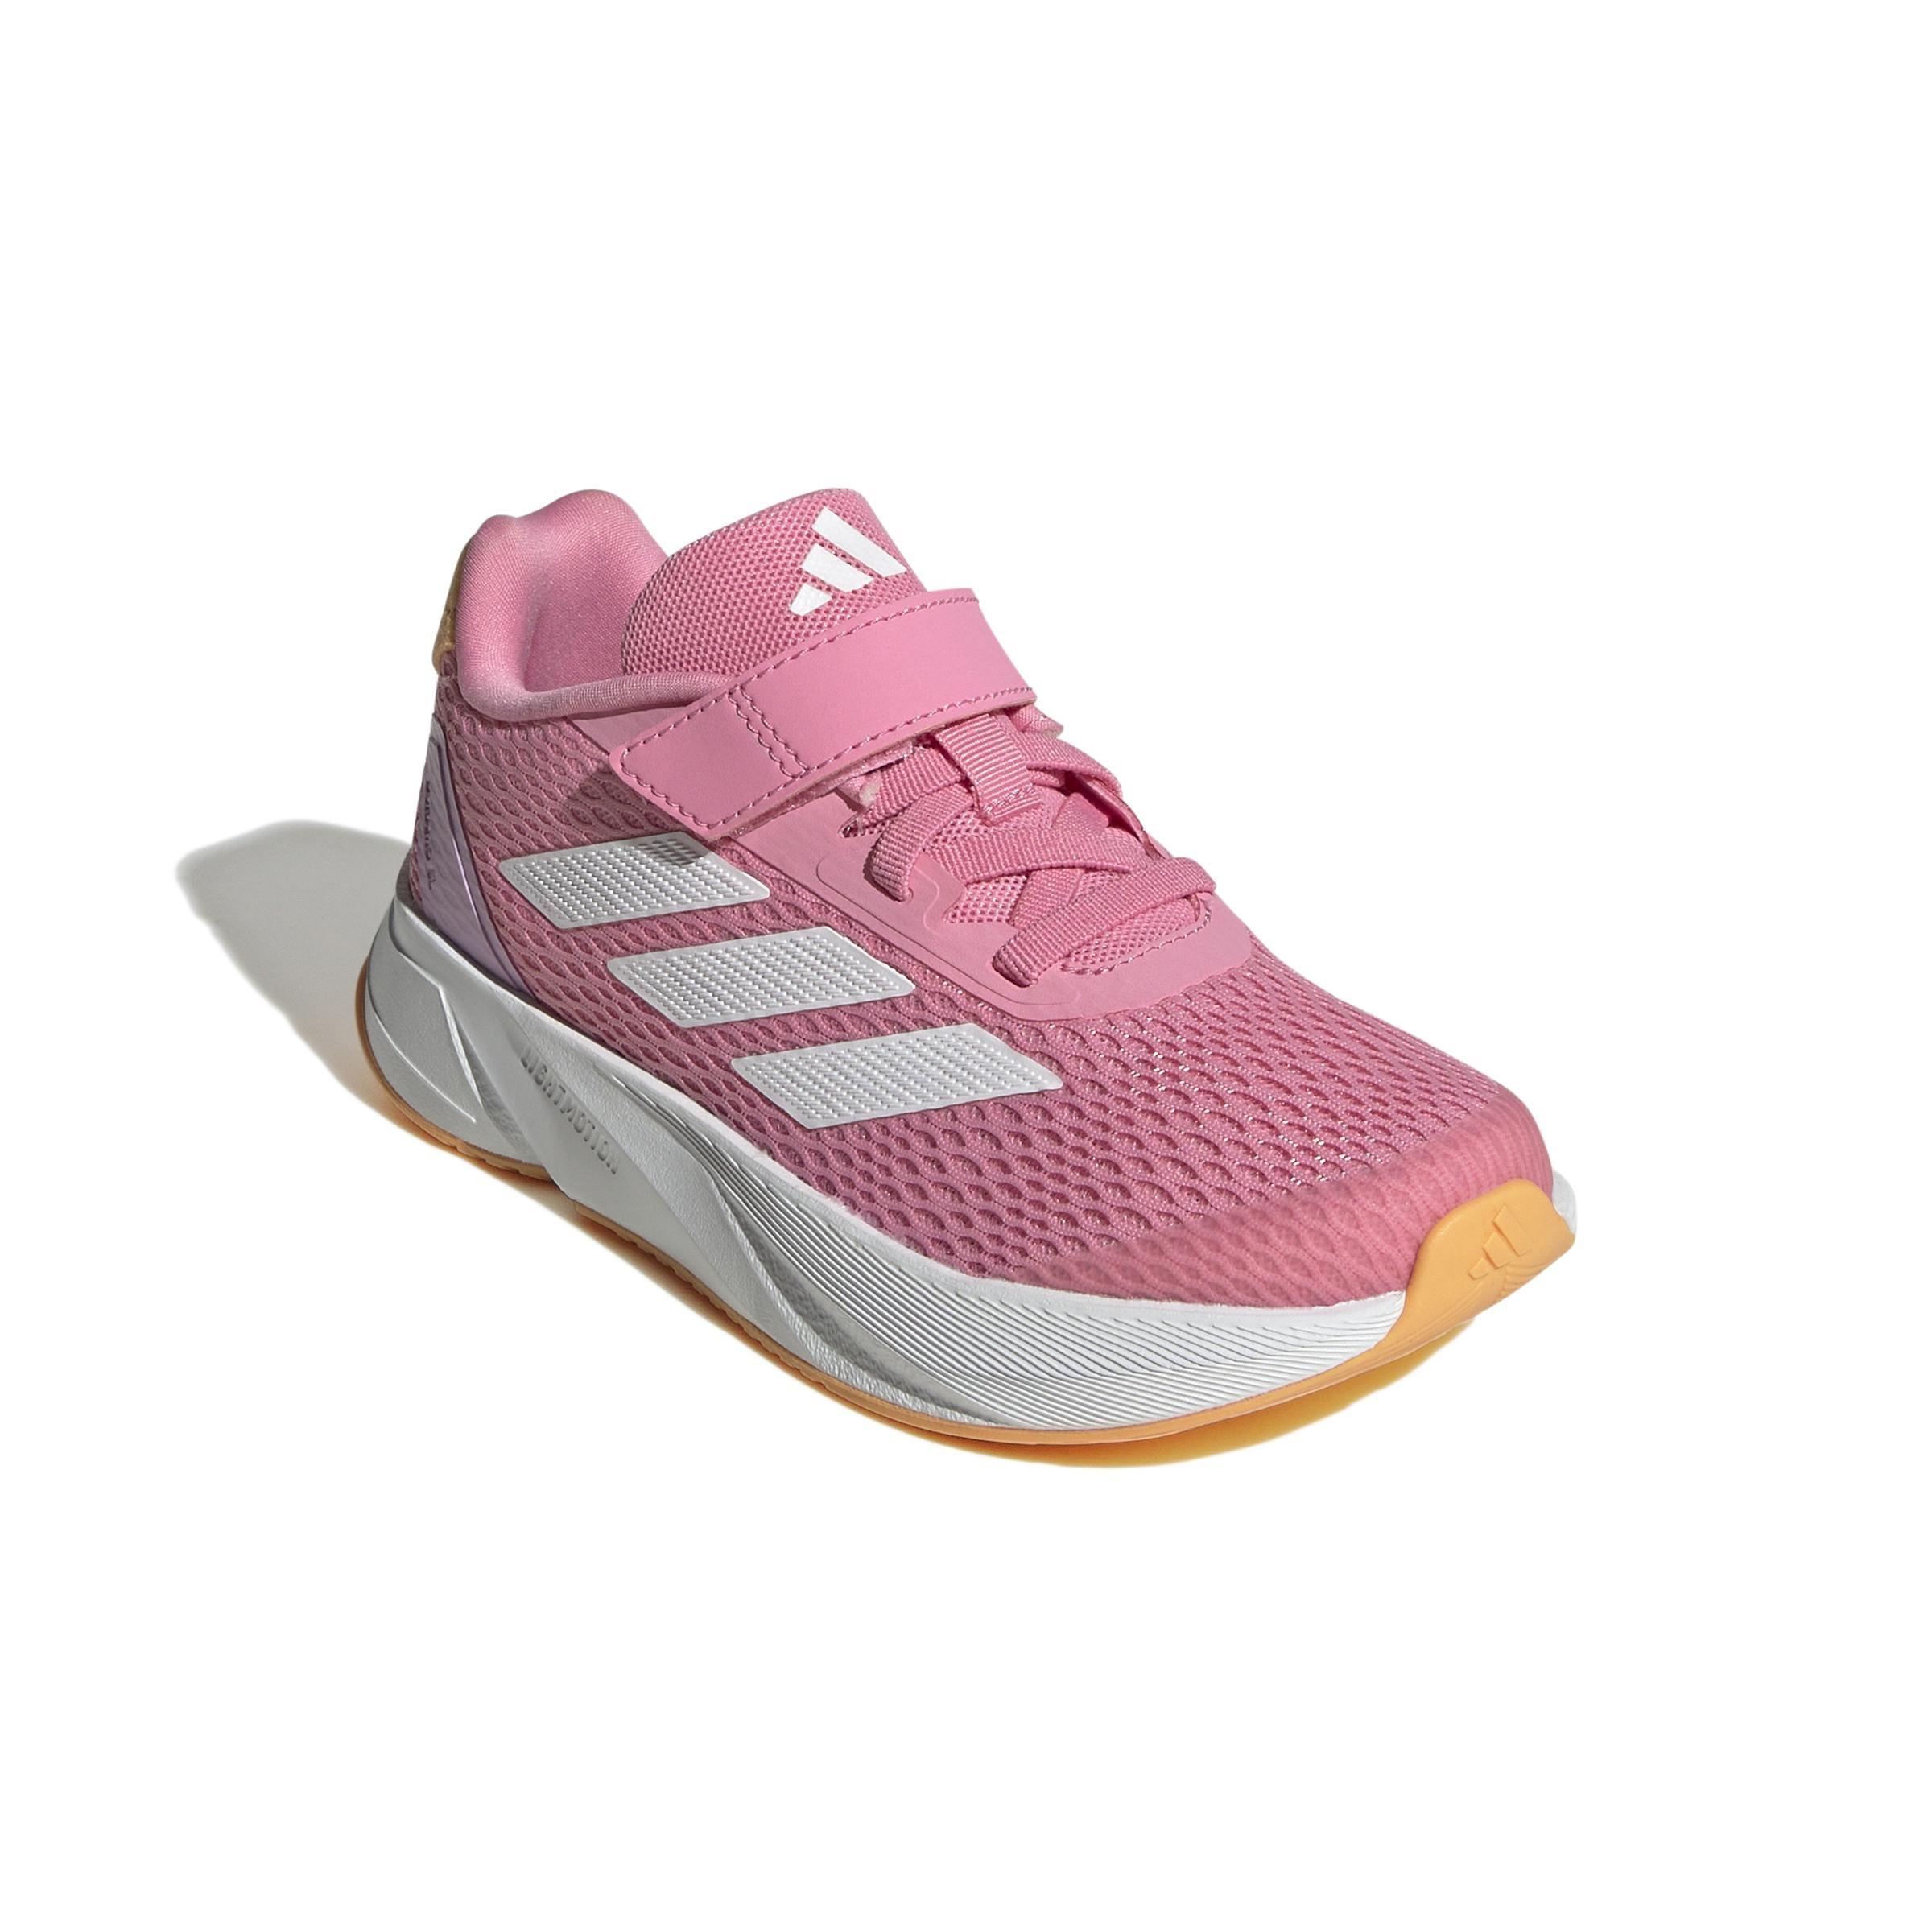 adidas - Unisex Kids Duramo Sl Shoes, Pink